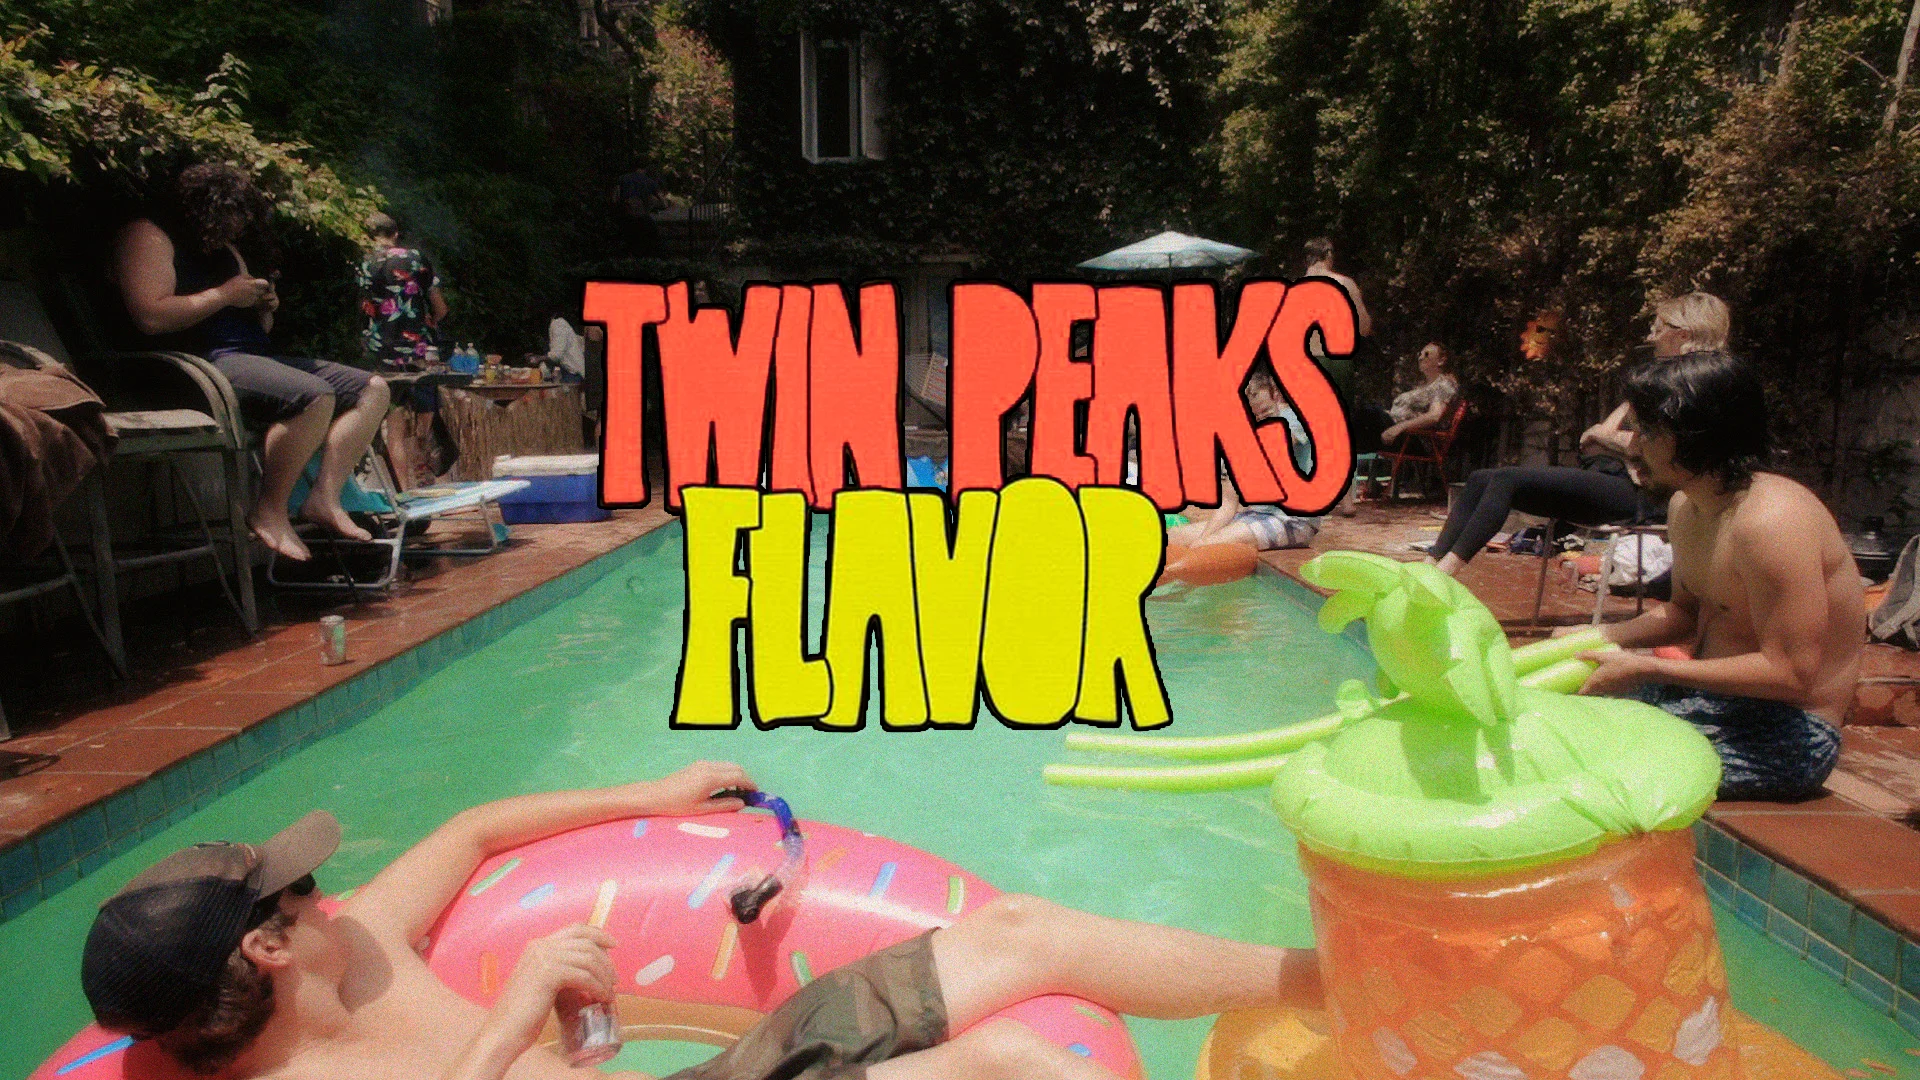 Twin Peaks - Flavor (Official Video) 